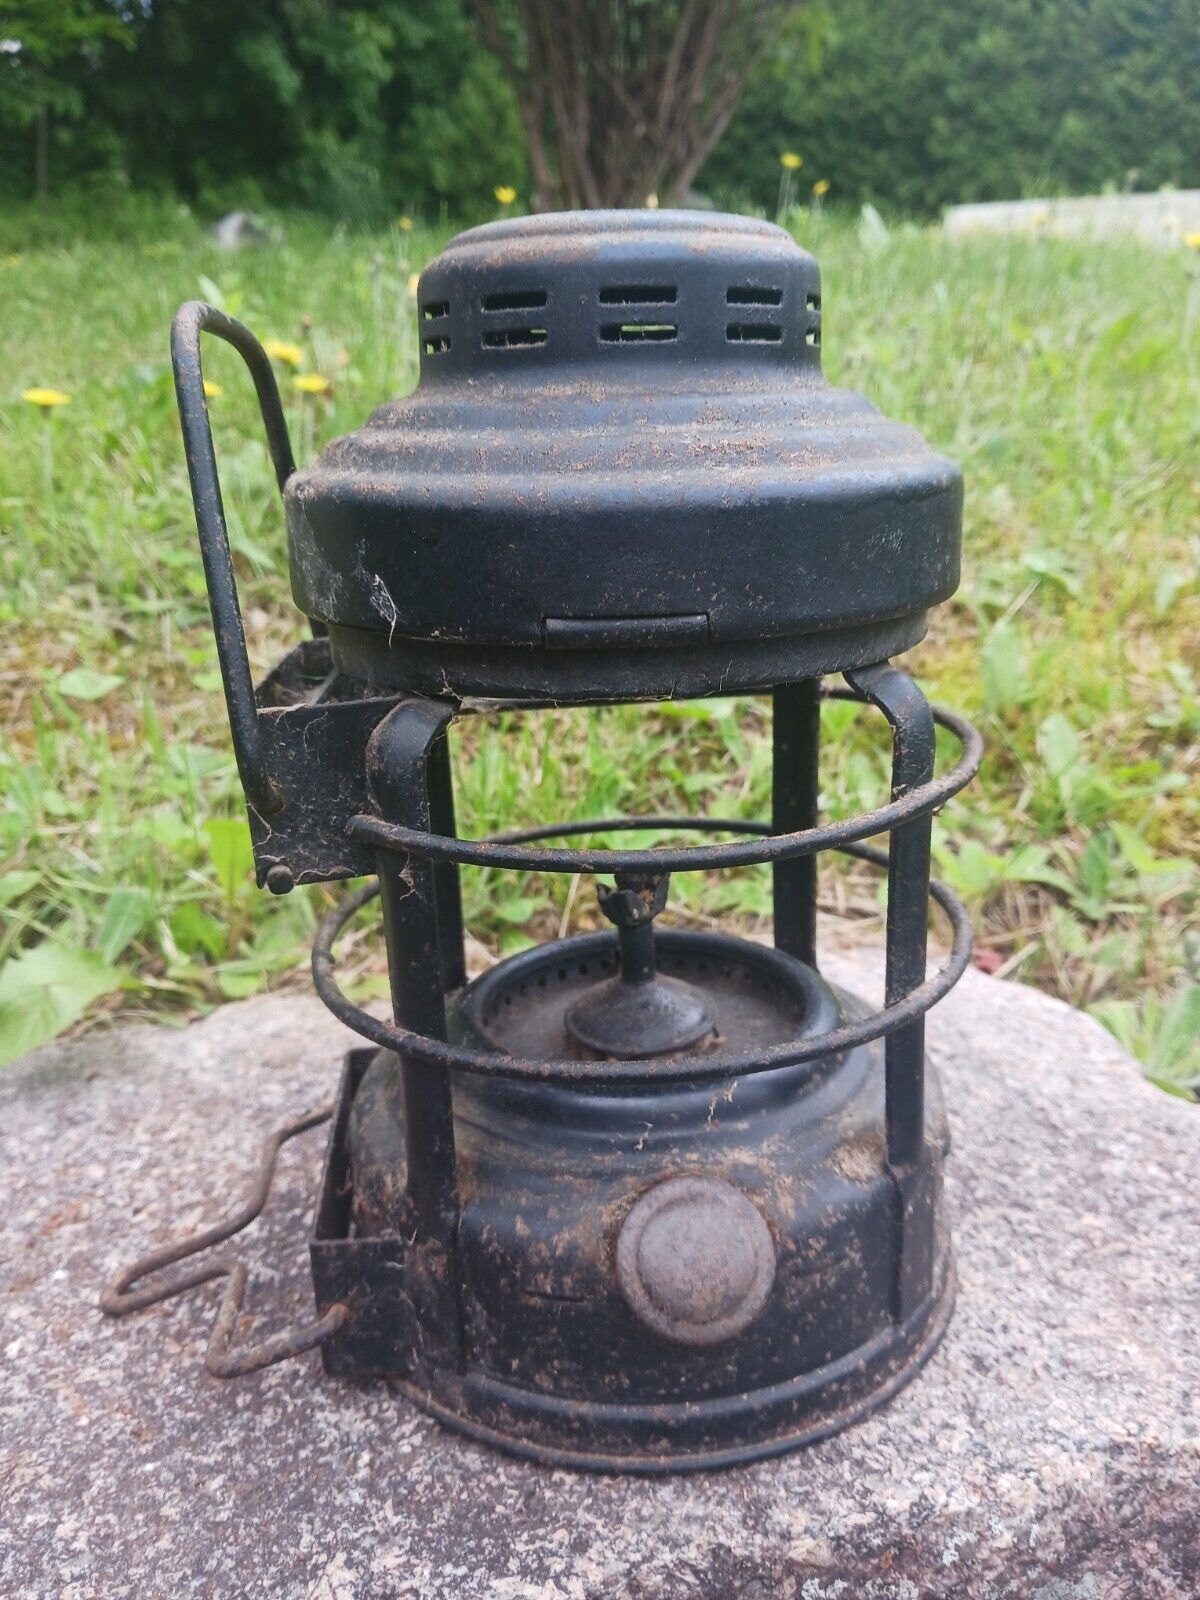 Vintage Embury Luck-E-Lite Number 25 Side Mount Railroad Lantern.